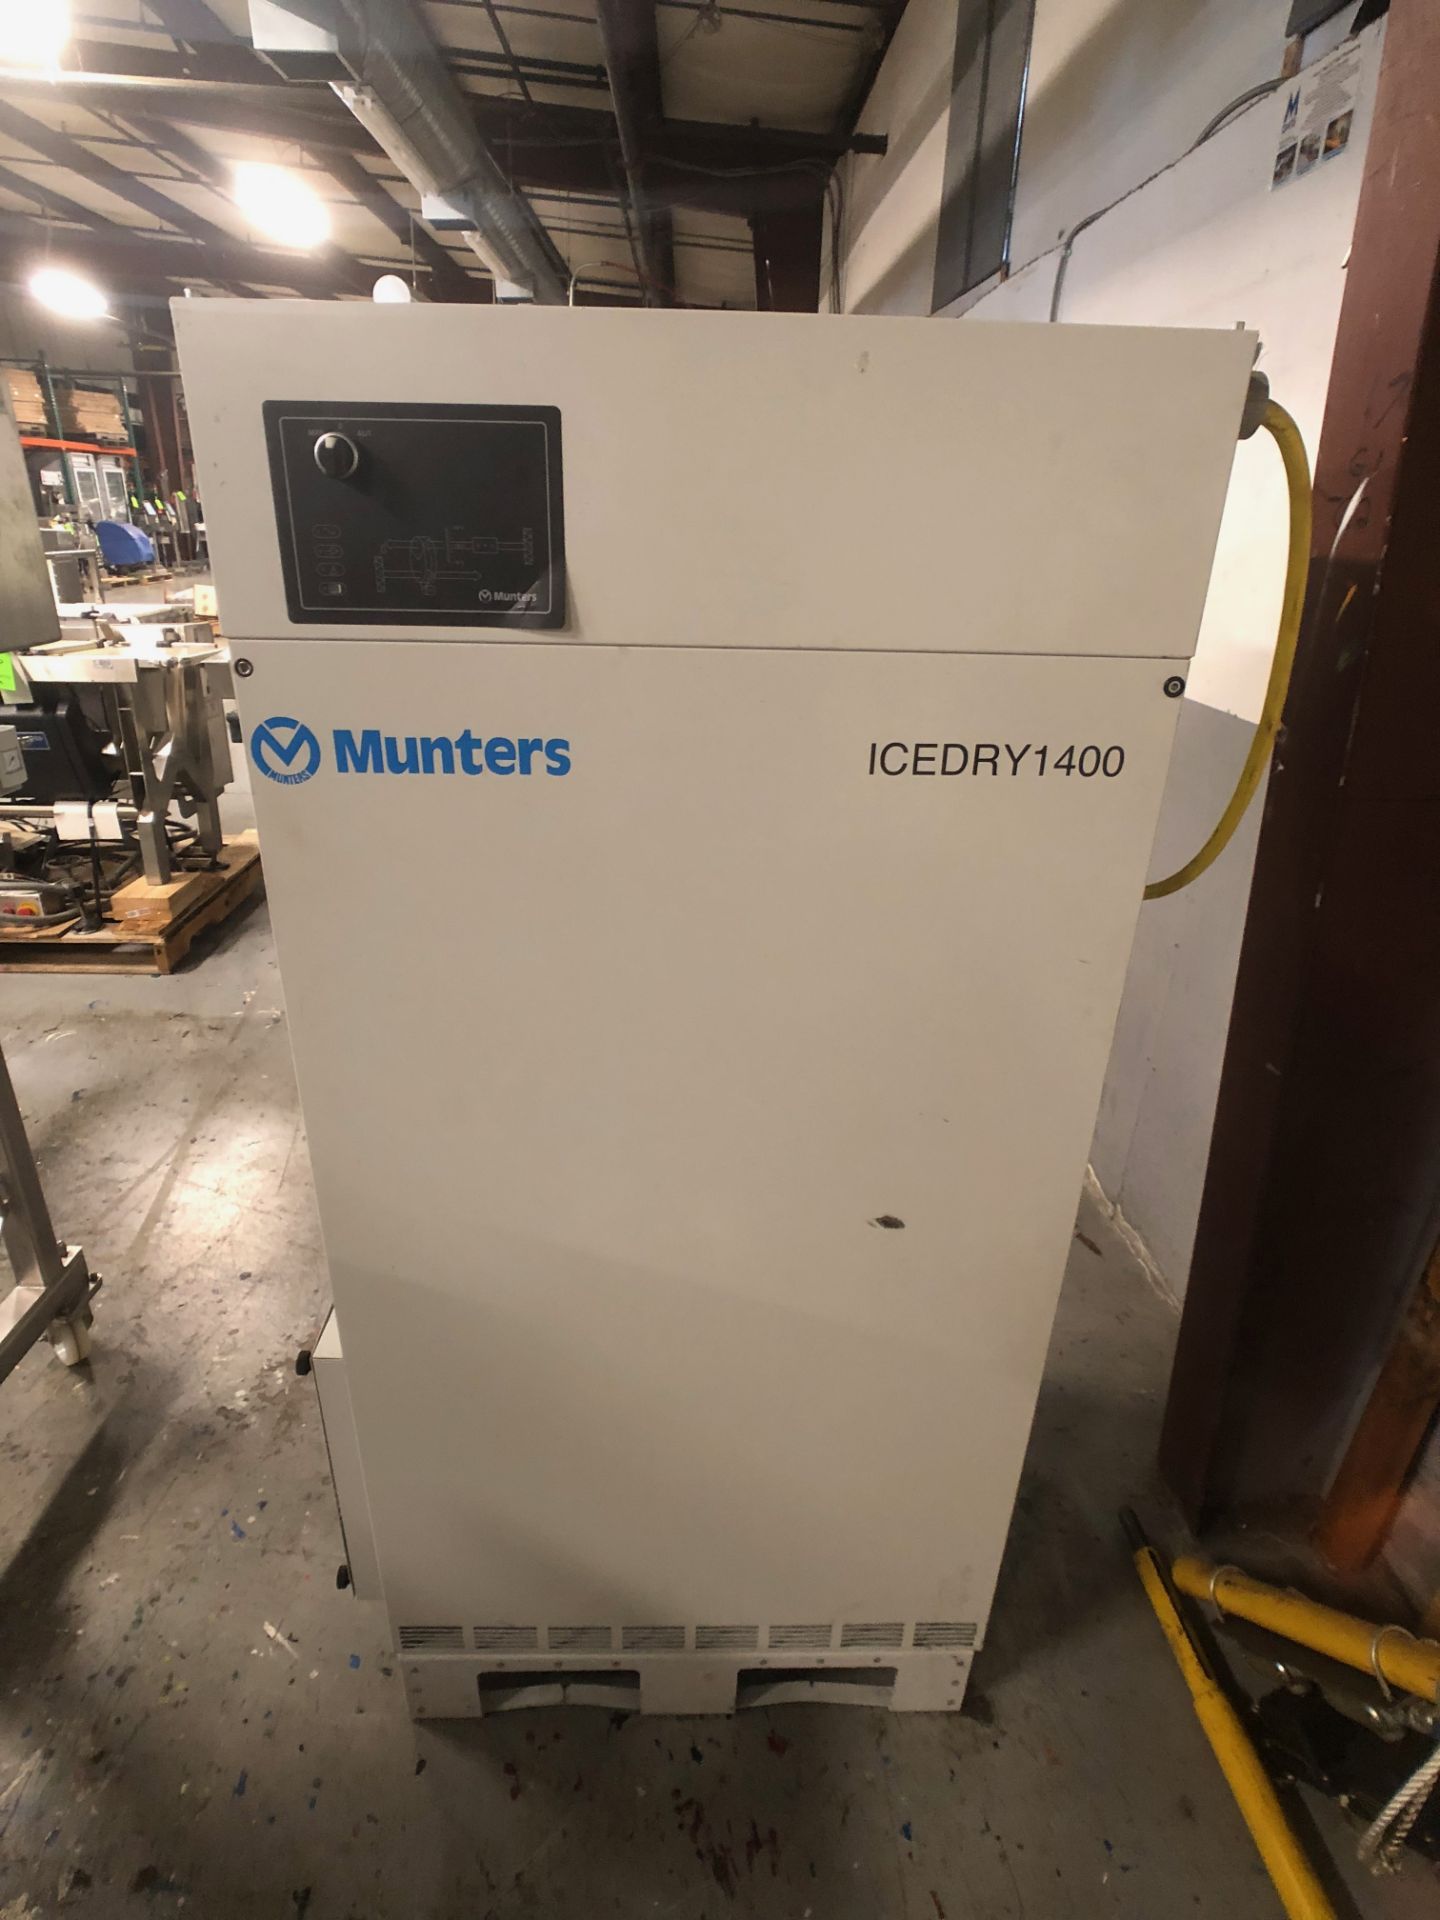 2013 Munters Icedry 1400 Dehumidifier, Model ICEDRY1400, Fab No. 1344 190531 55080, 3 Phase, 460 V - Image 2 of 9